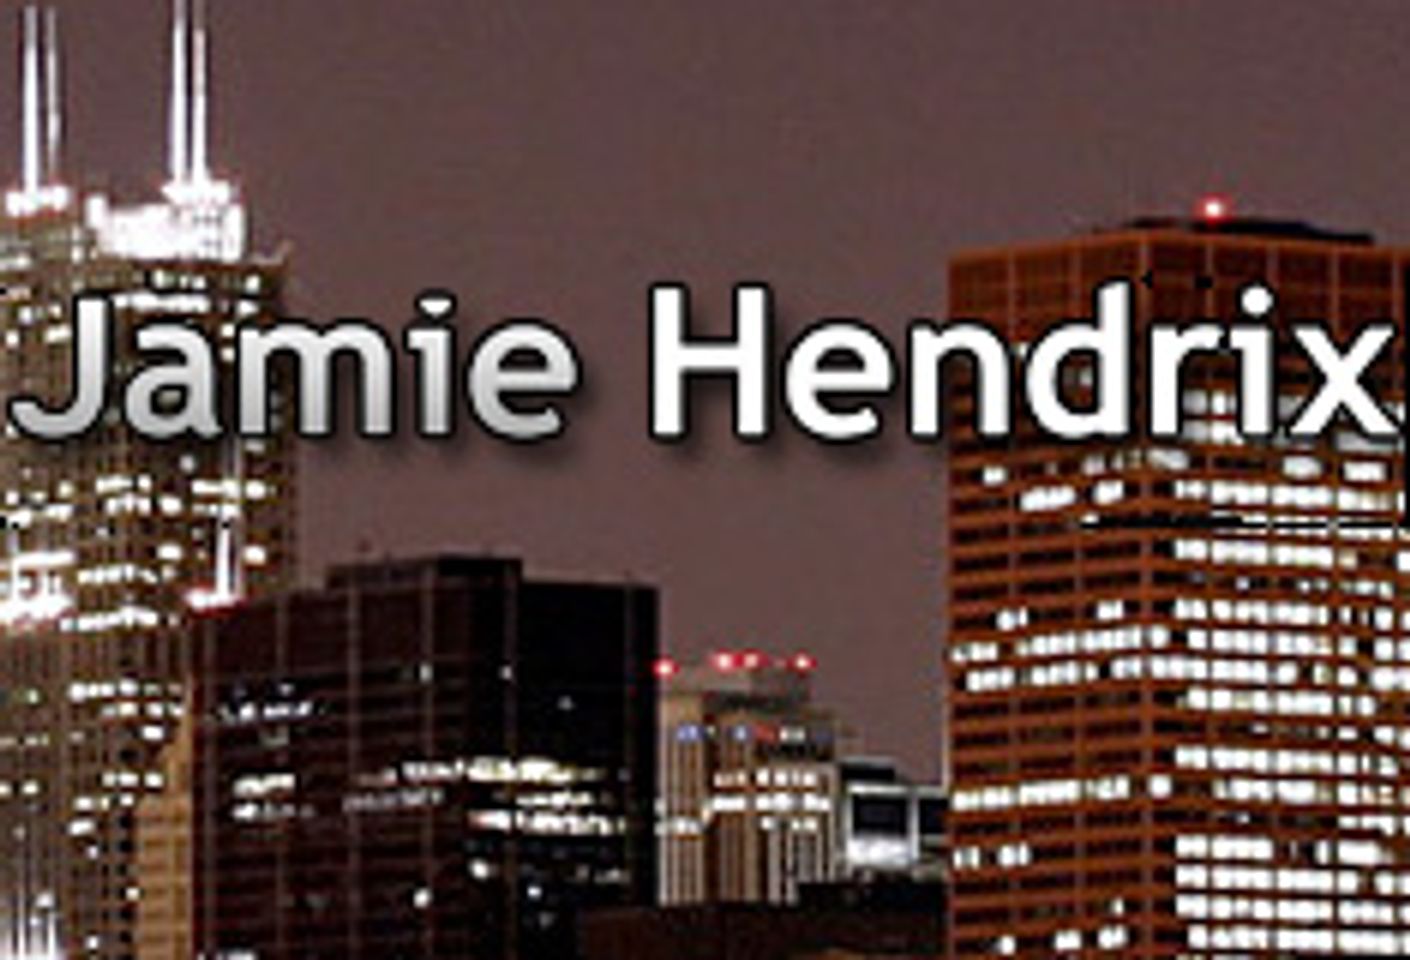 Jamie Hendrix Re-launches Website